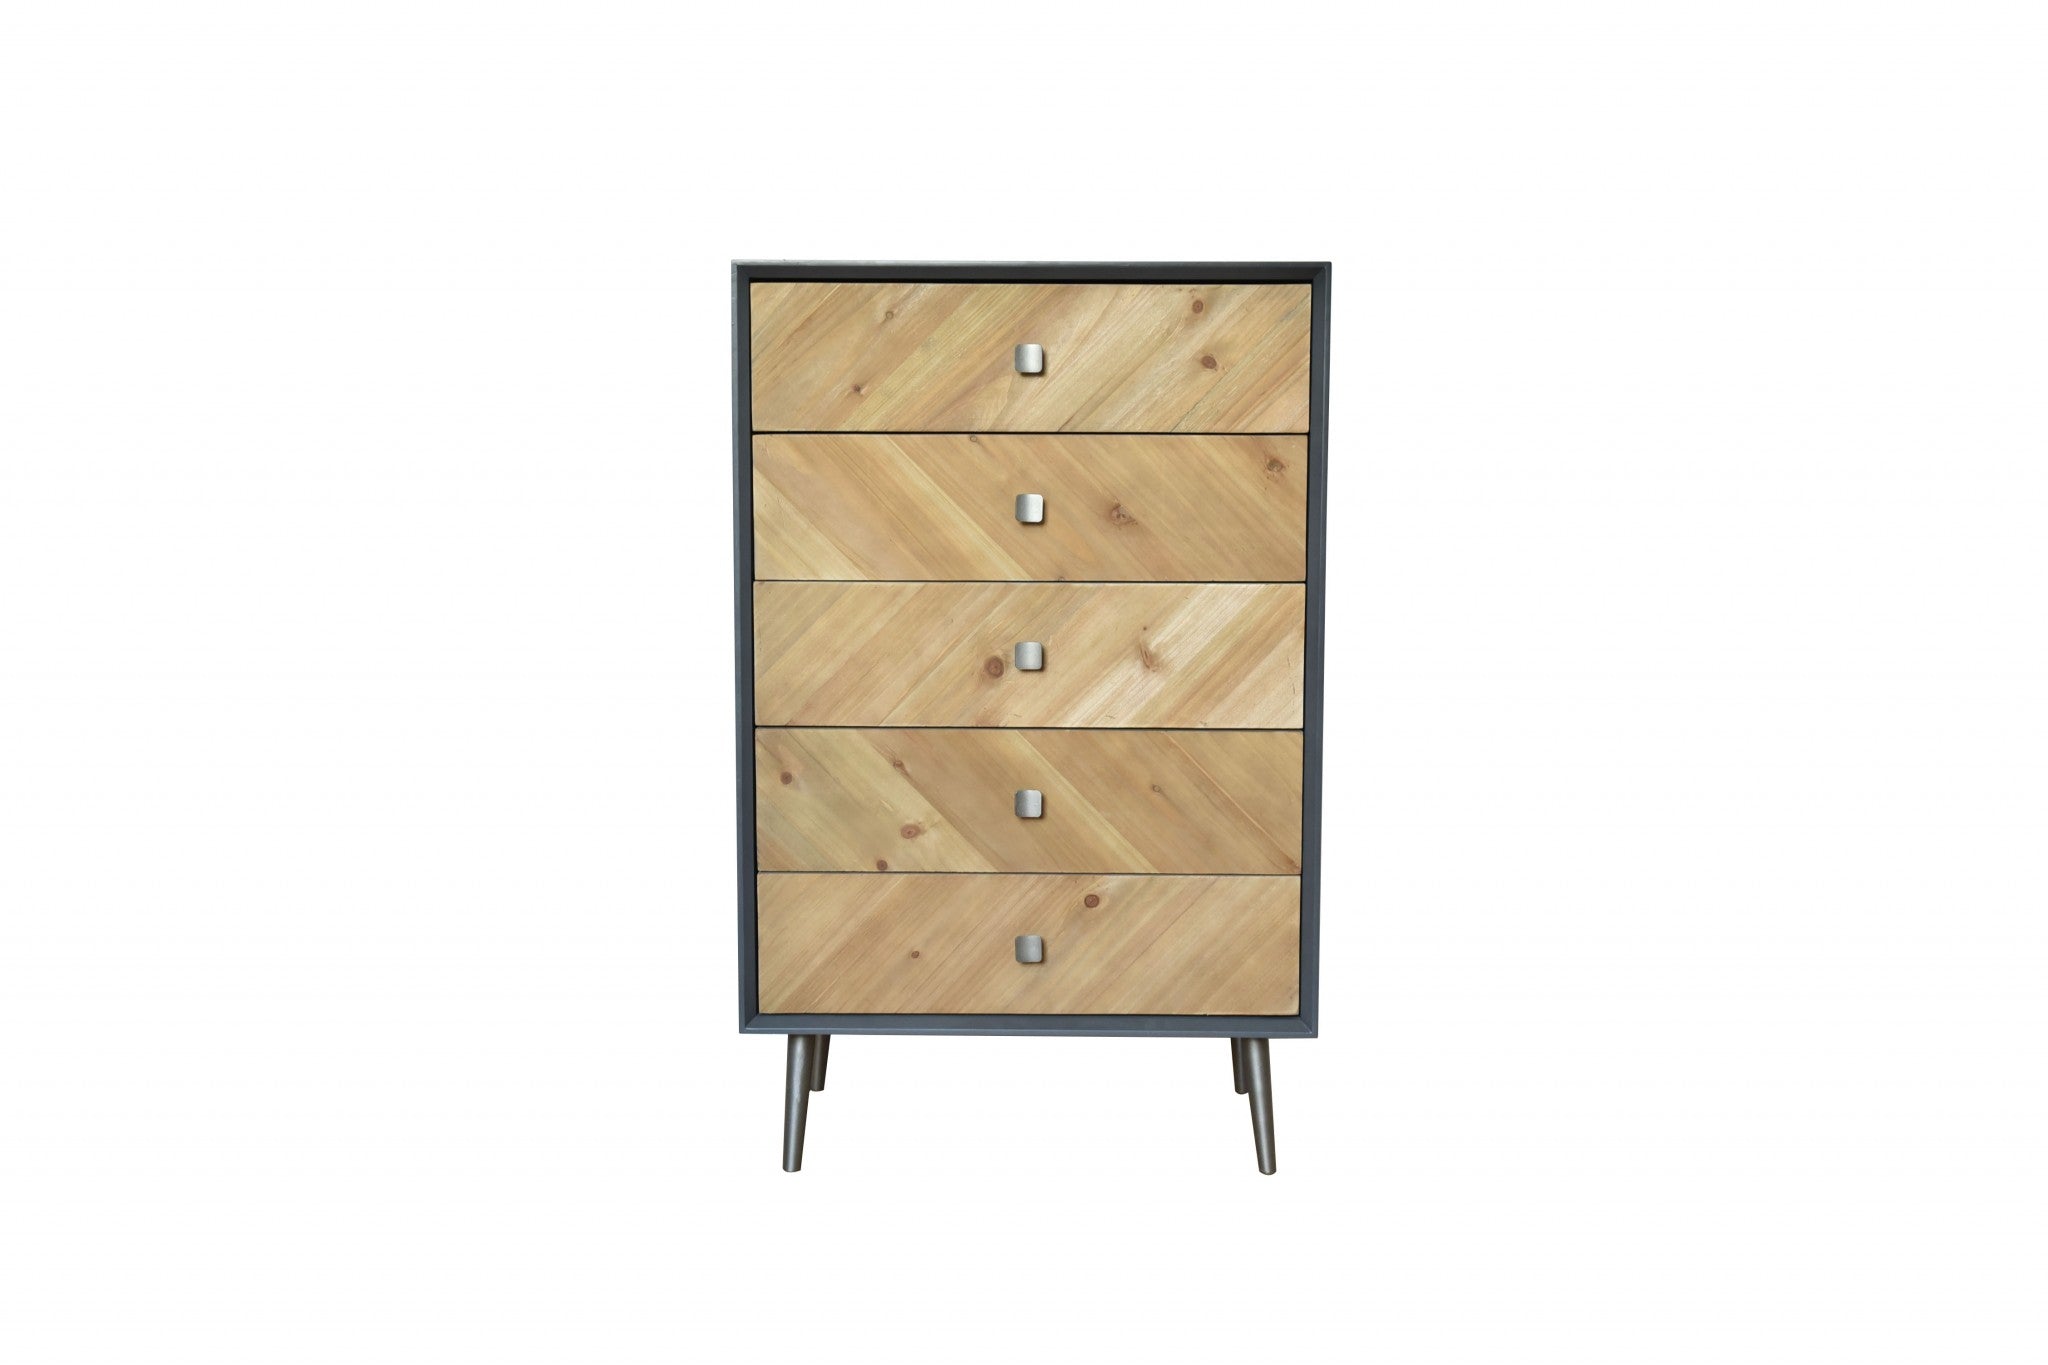 16.75 X 25.5 X 41 Gray Wood Cabinet